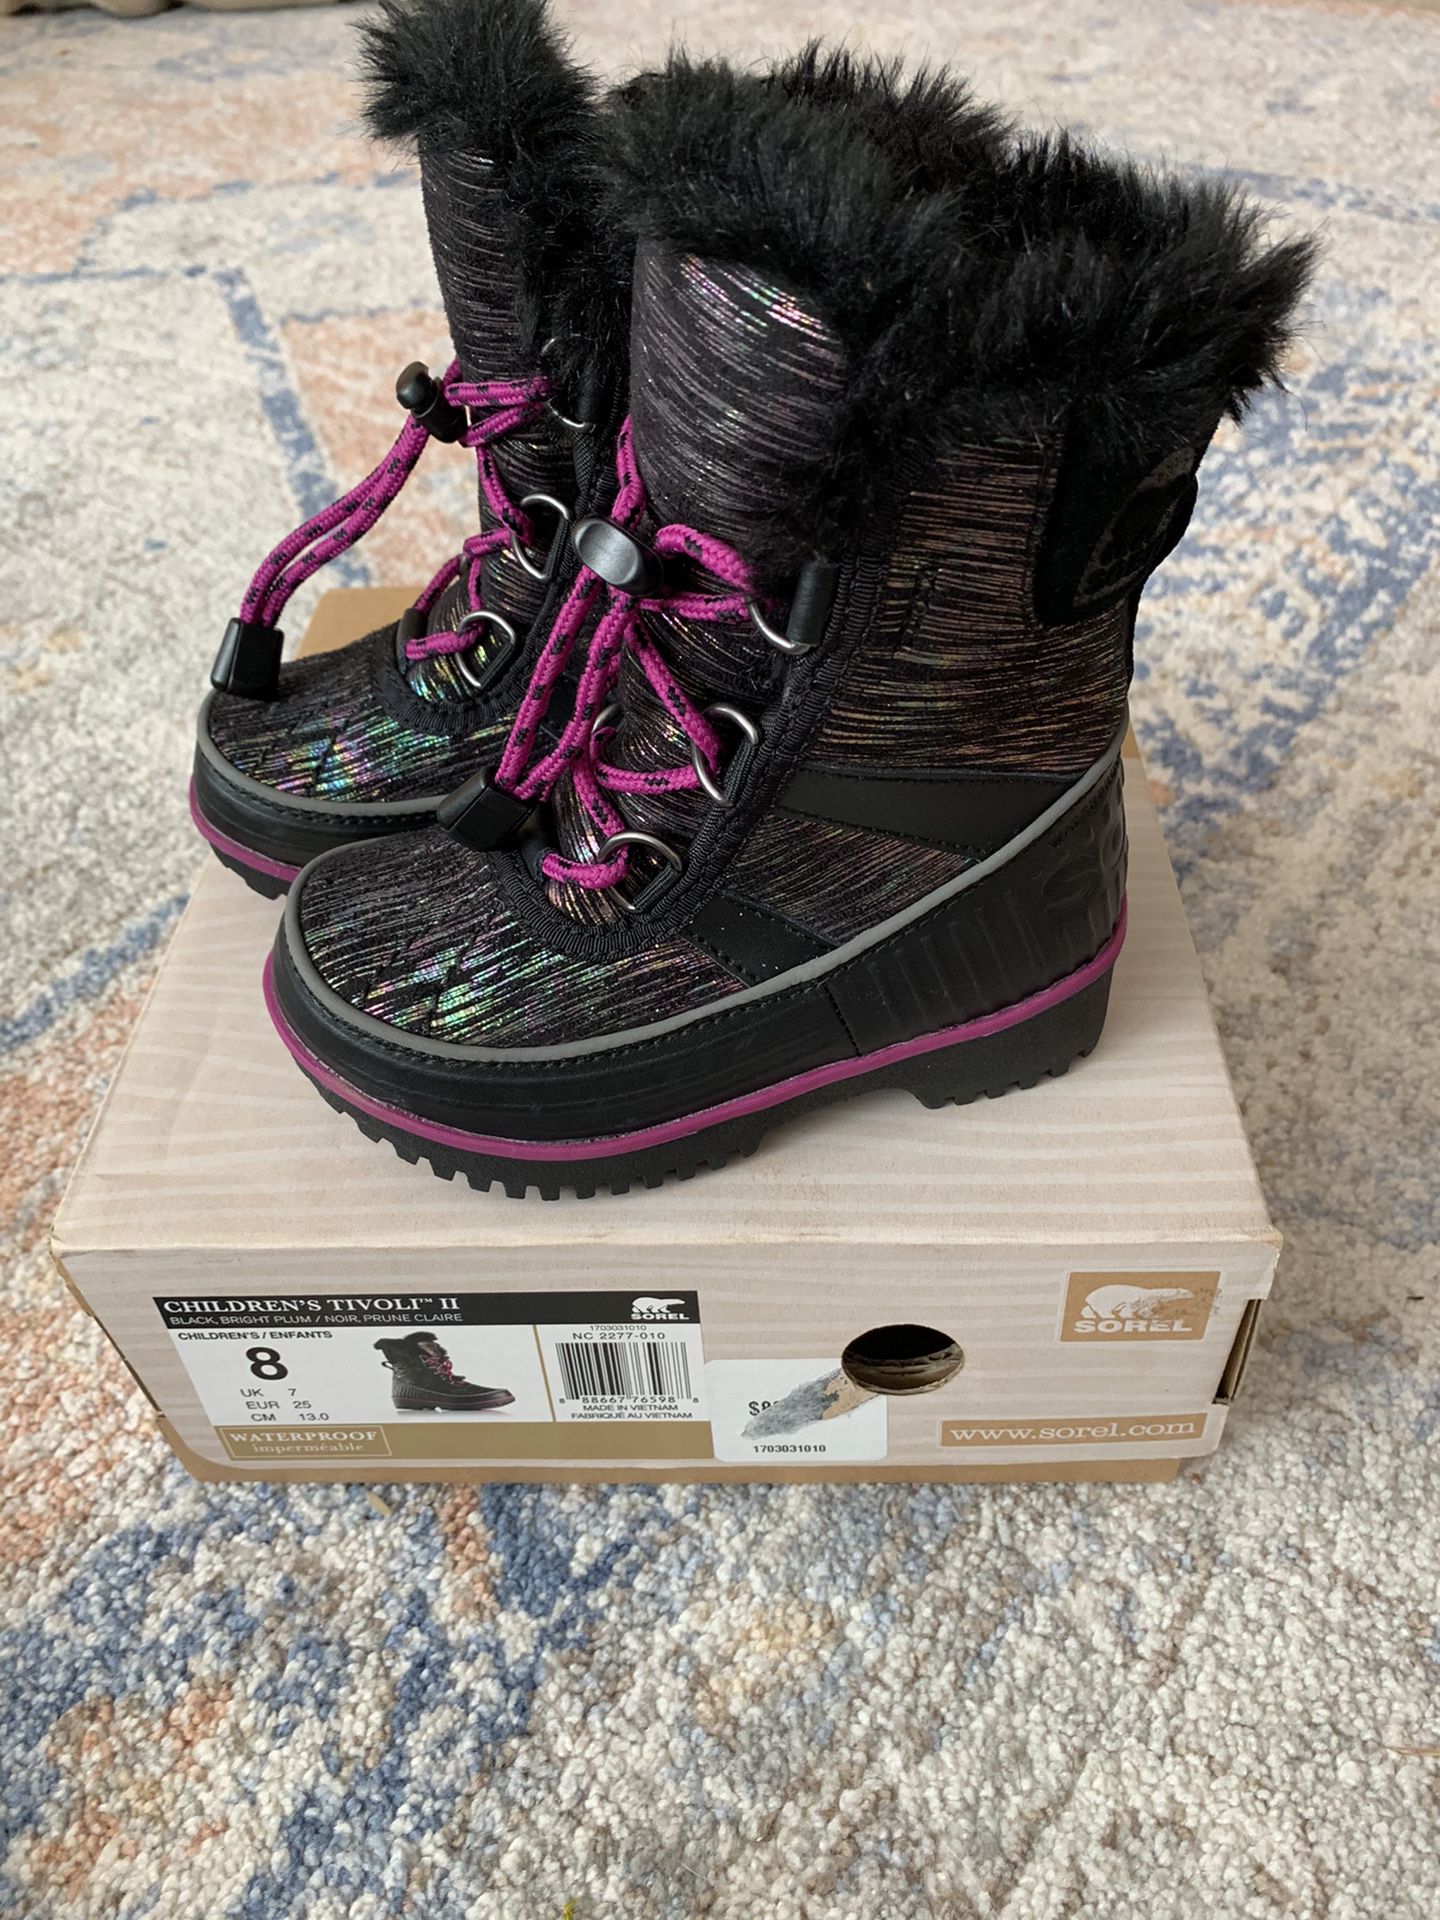 Kids new sorel snow boots size 8